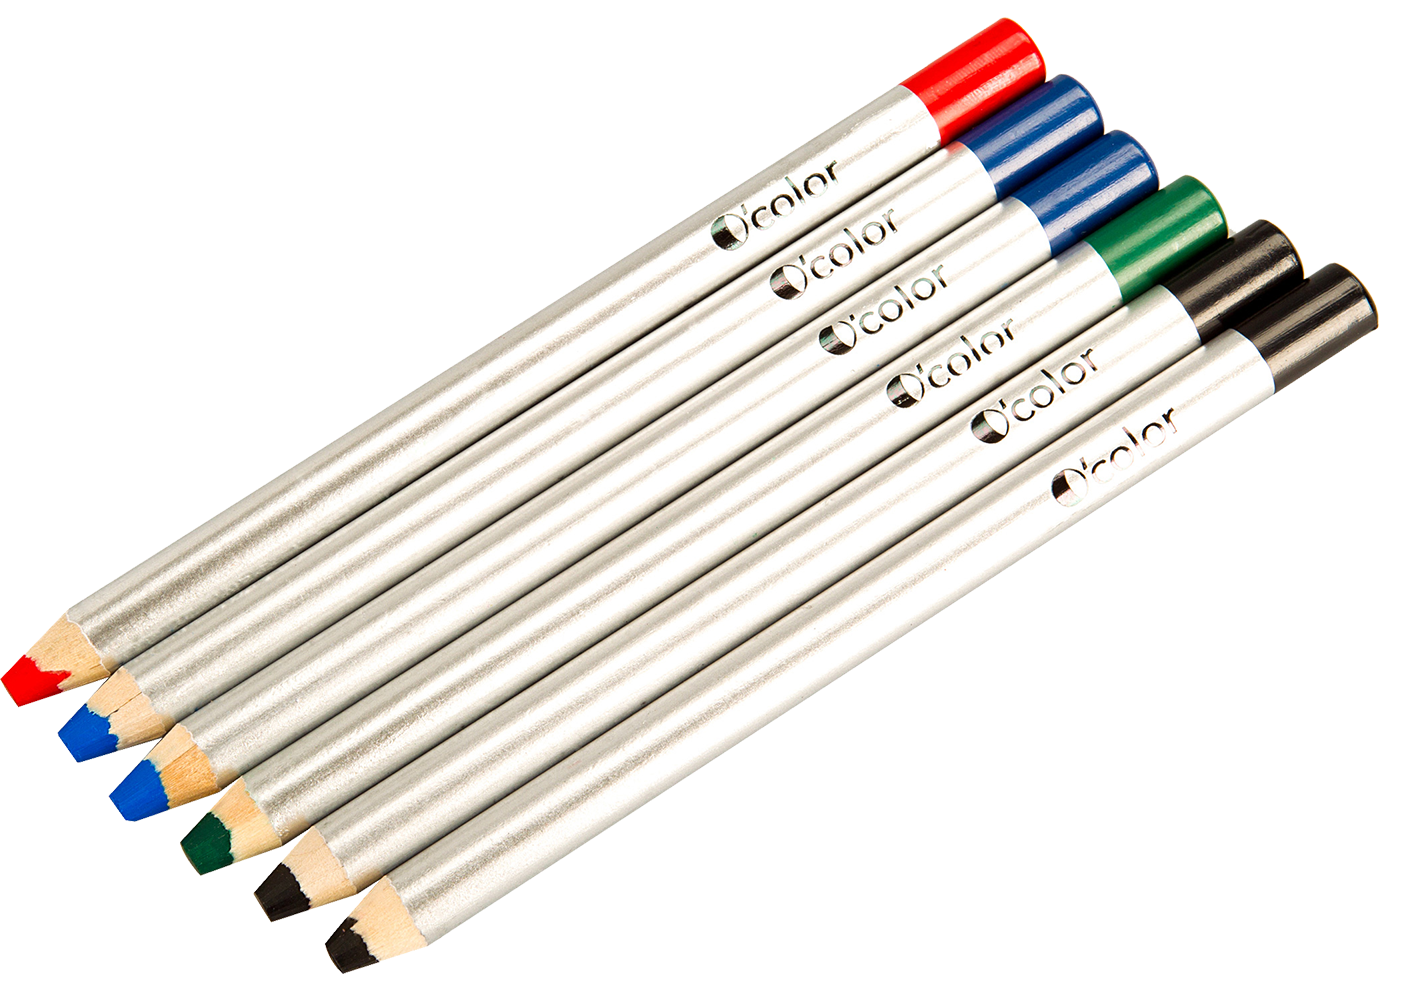 Etui de 6 crayons gros modules - Couleurs assorties